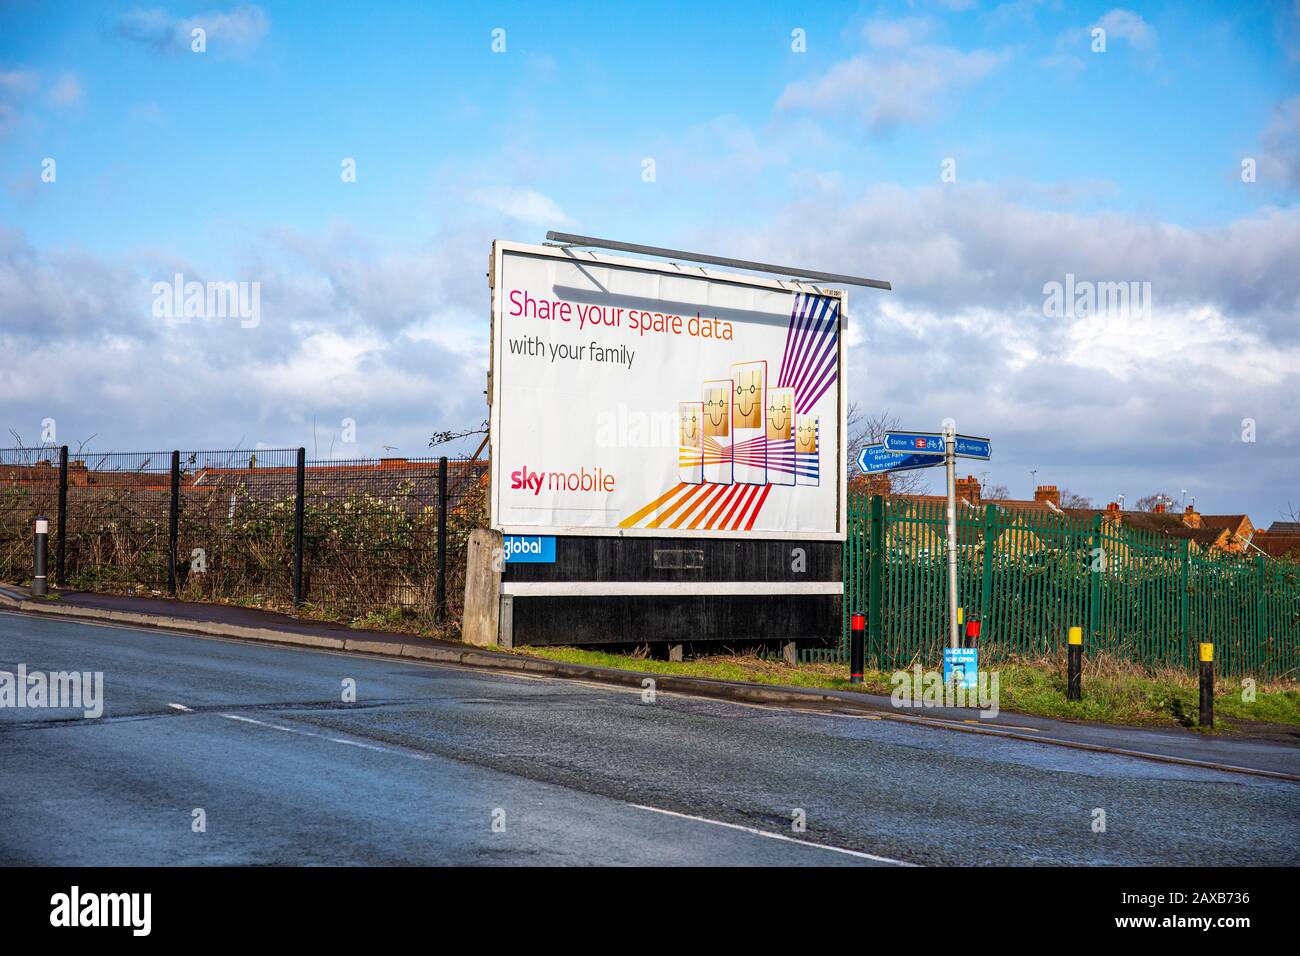 Reklametafel Werbung Sky Mobile UK Stockfoto